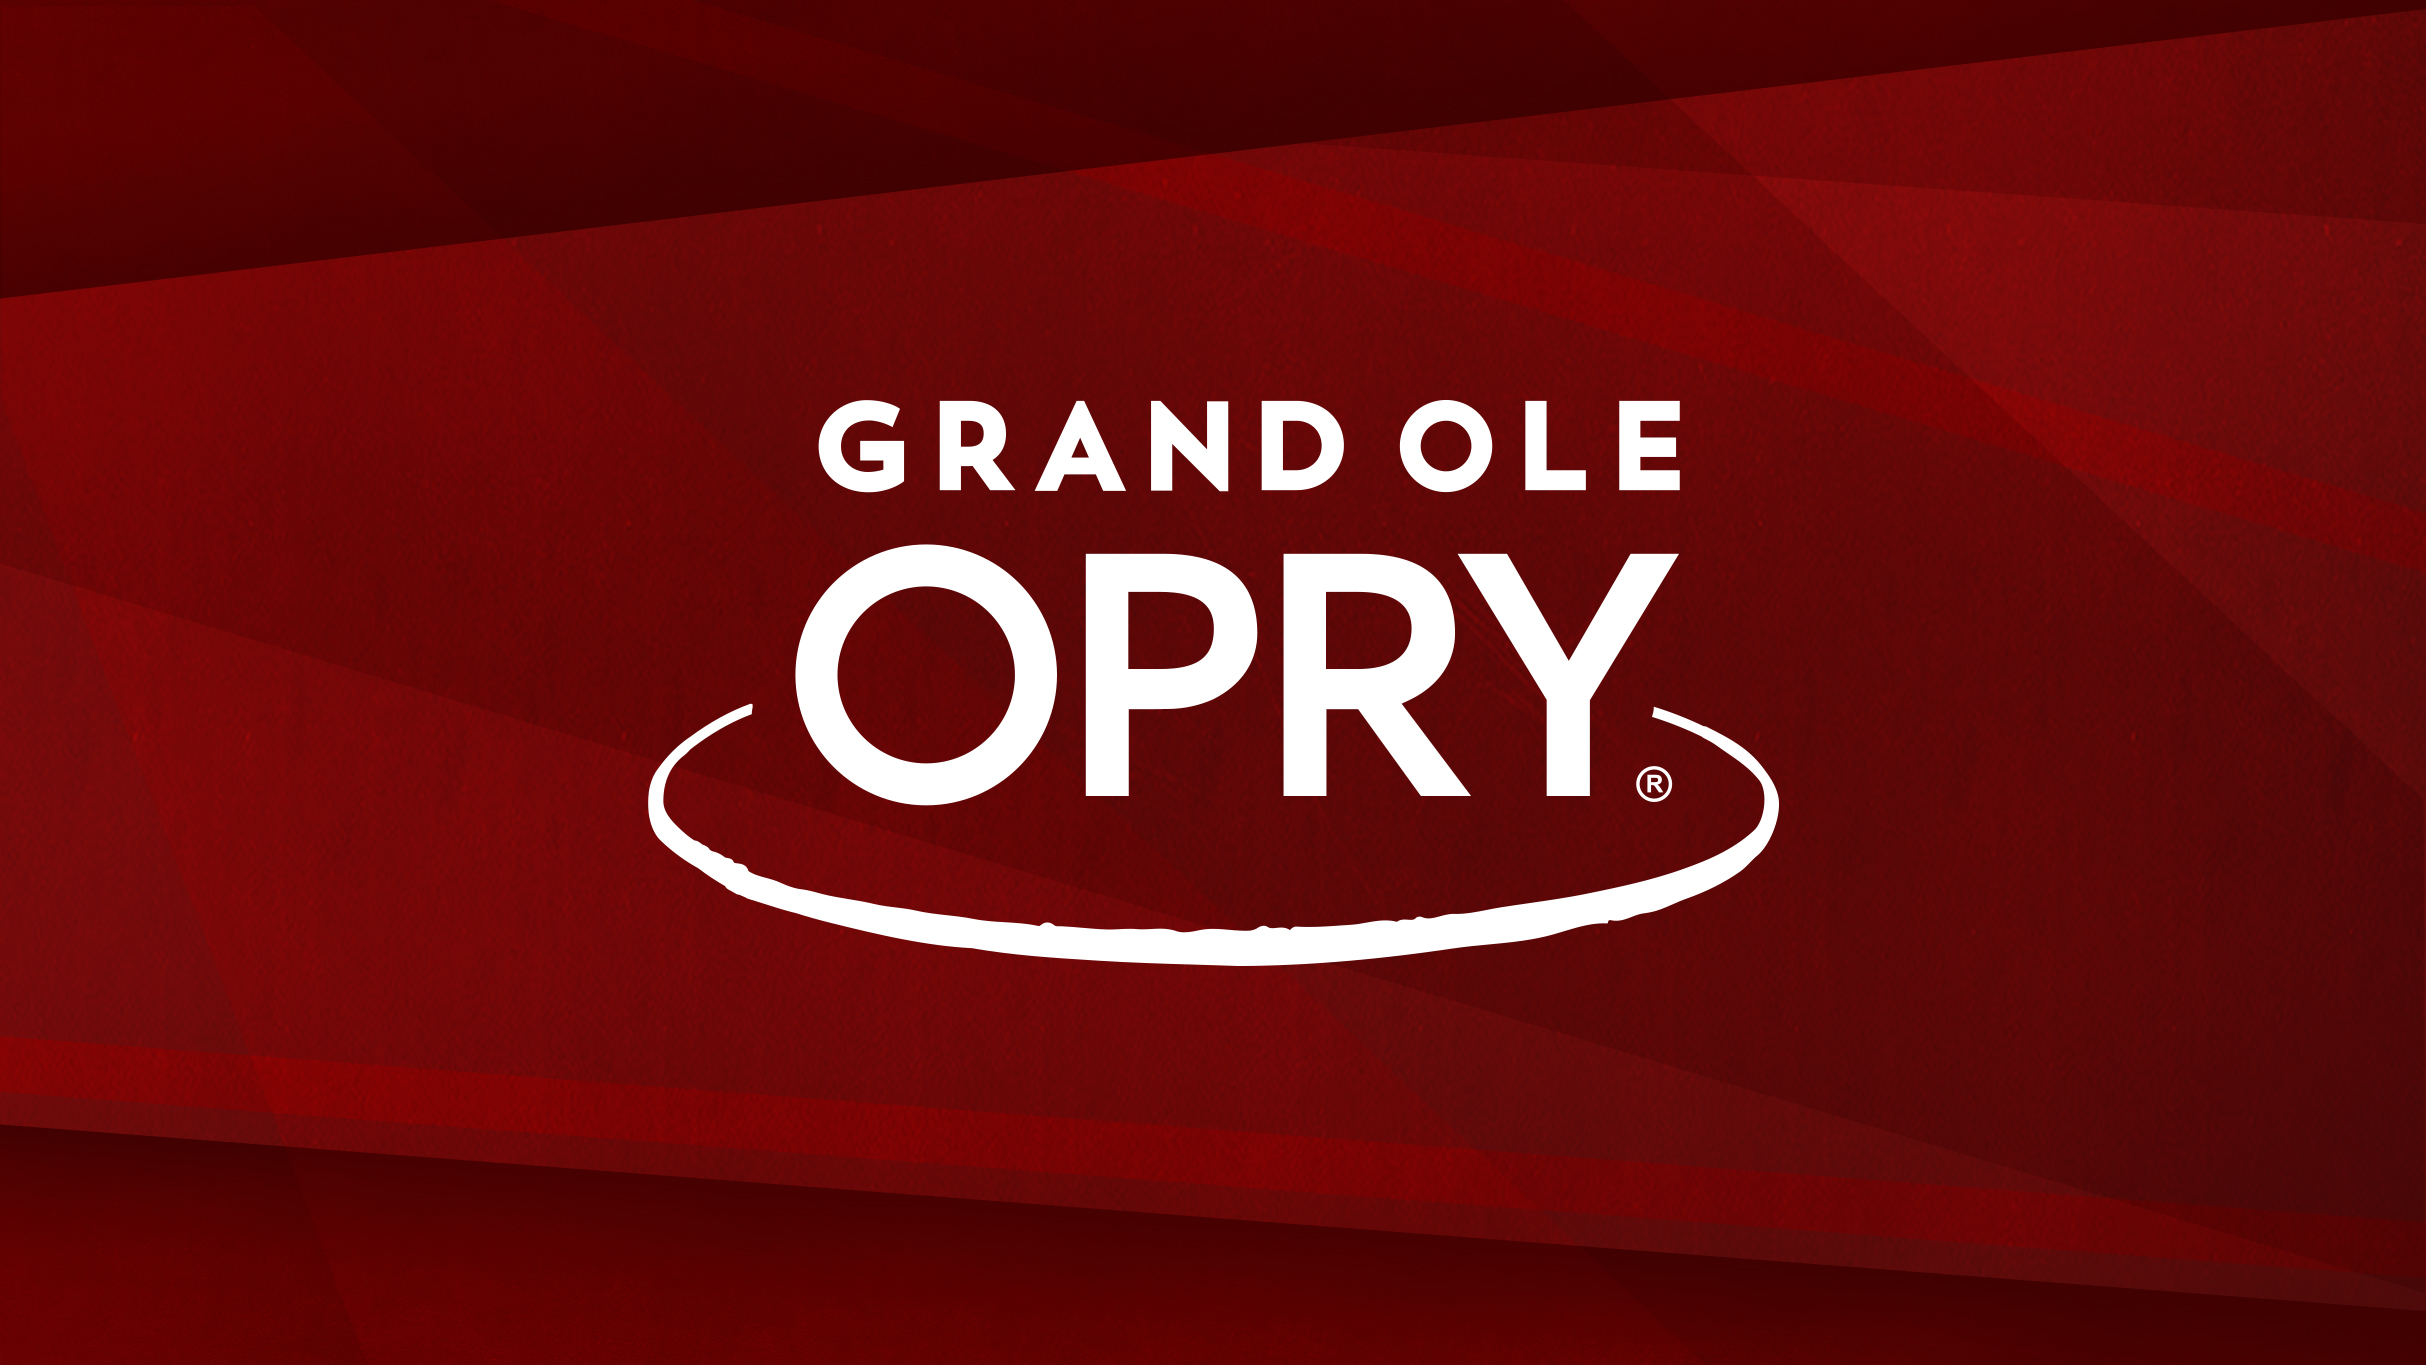 Grand Ole Opry w/ The HillBenders